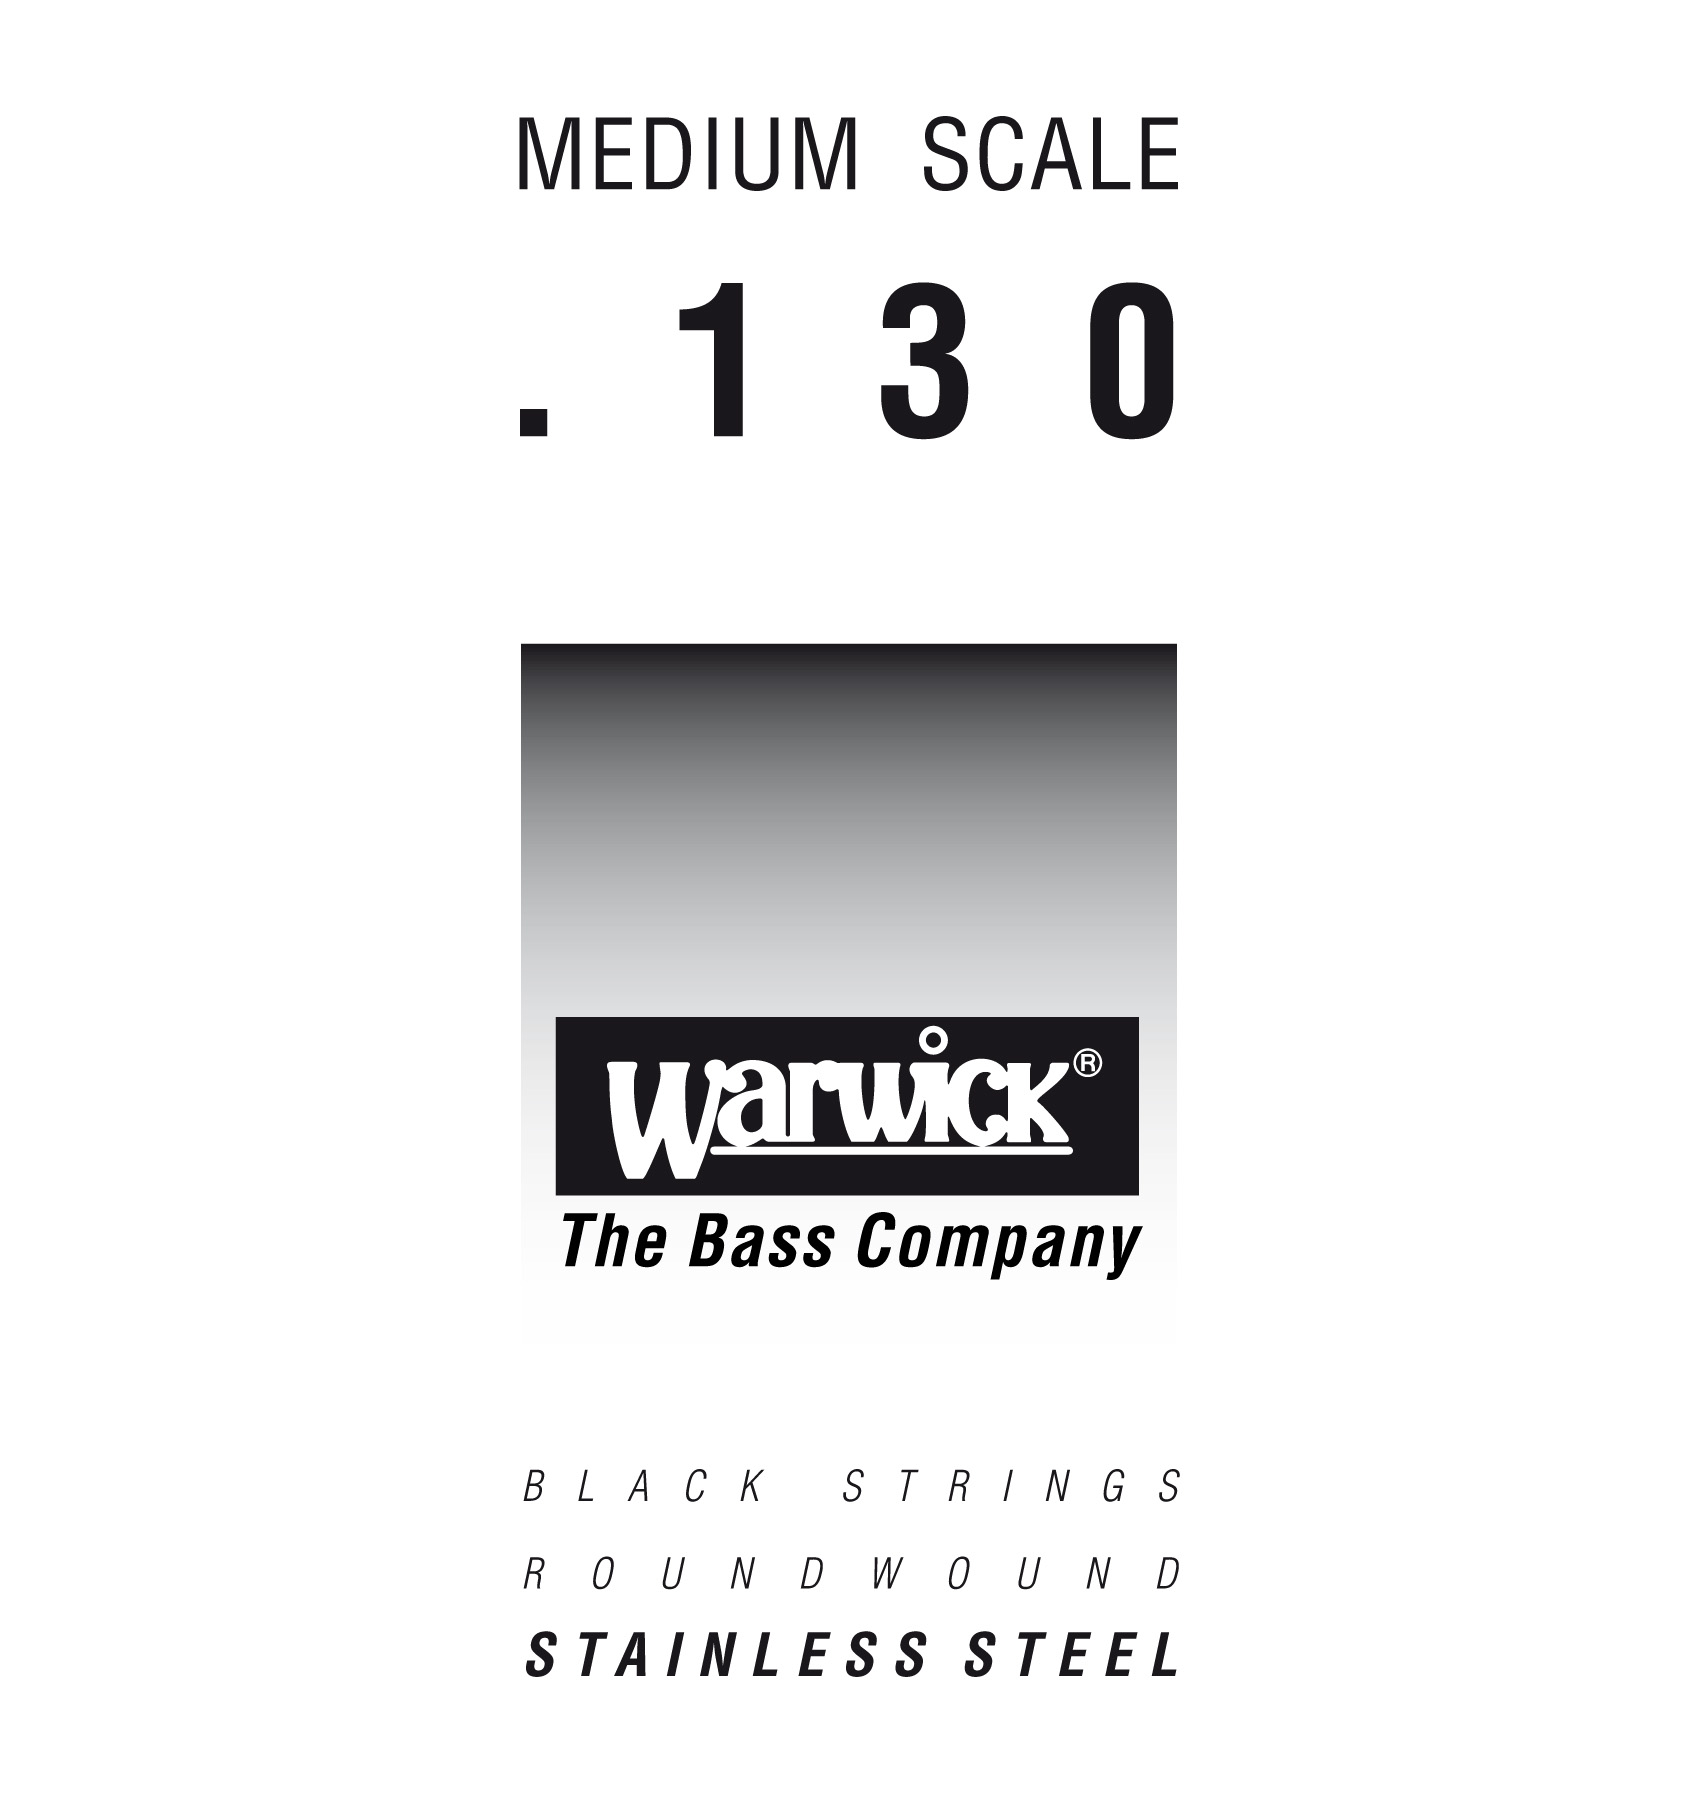 Warwick Black Label Bass Strings, Stainless Steel - Bass Single String, .130", Medium Scale